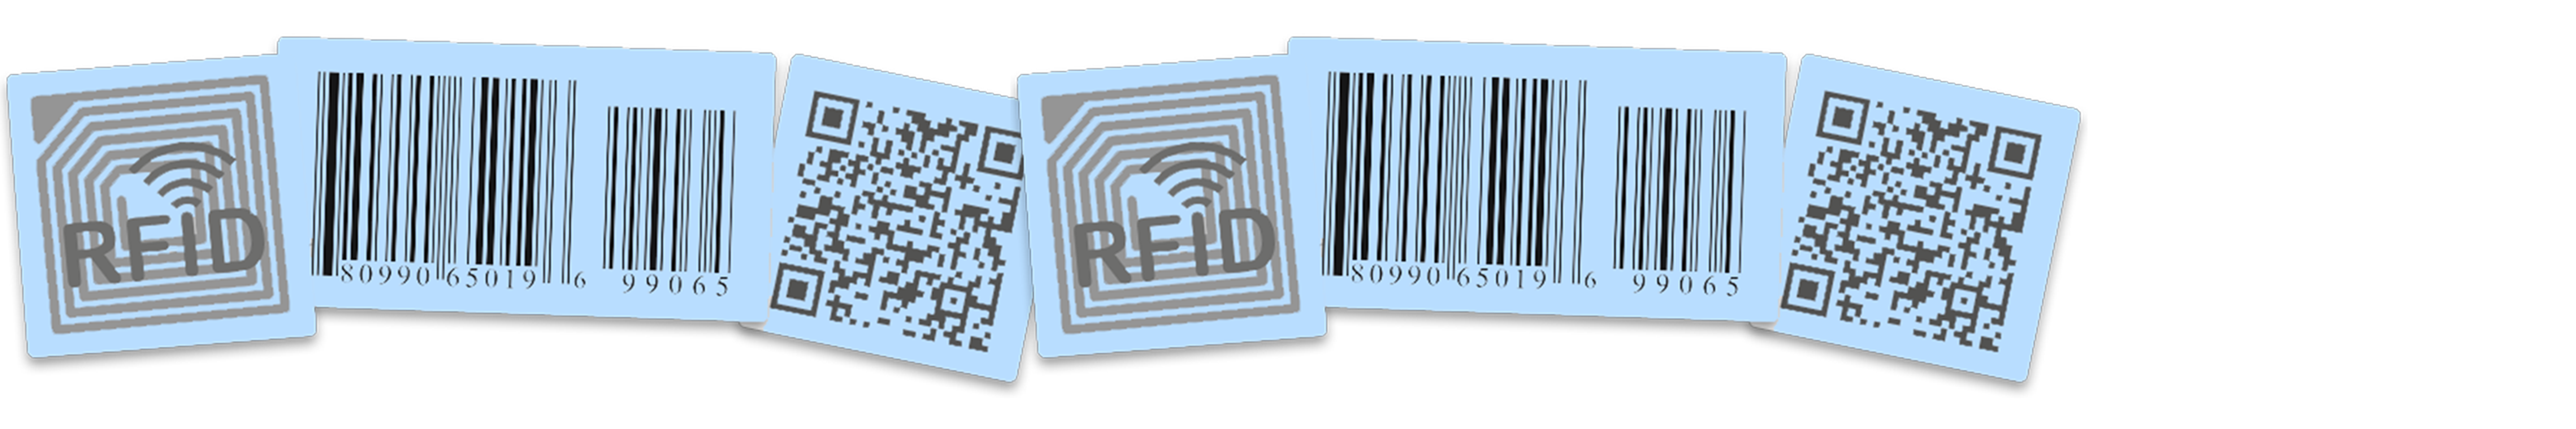 soorten barcodes